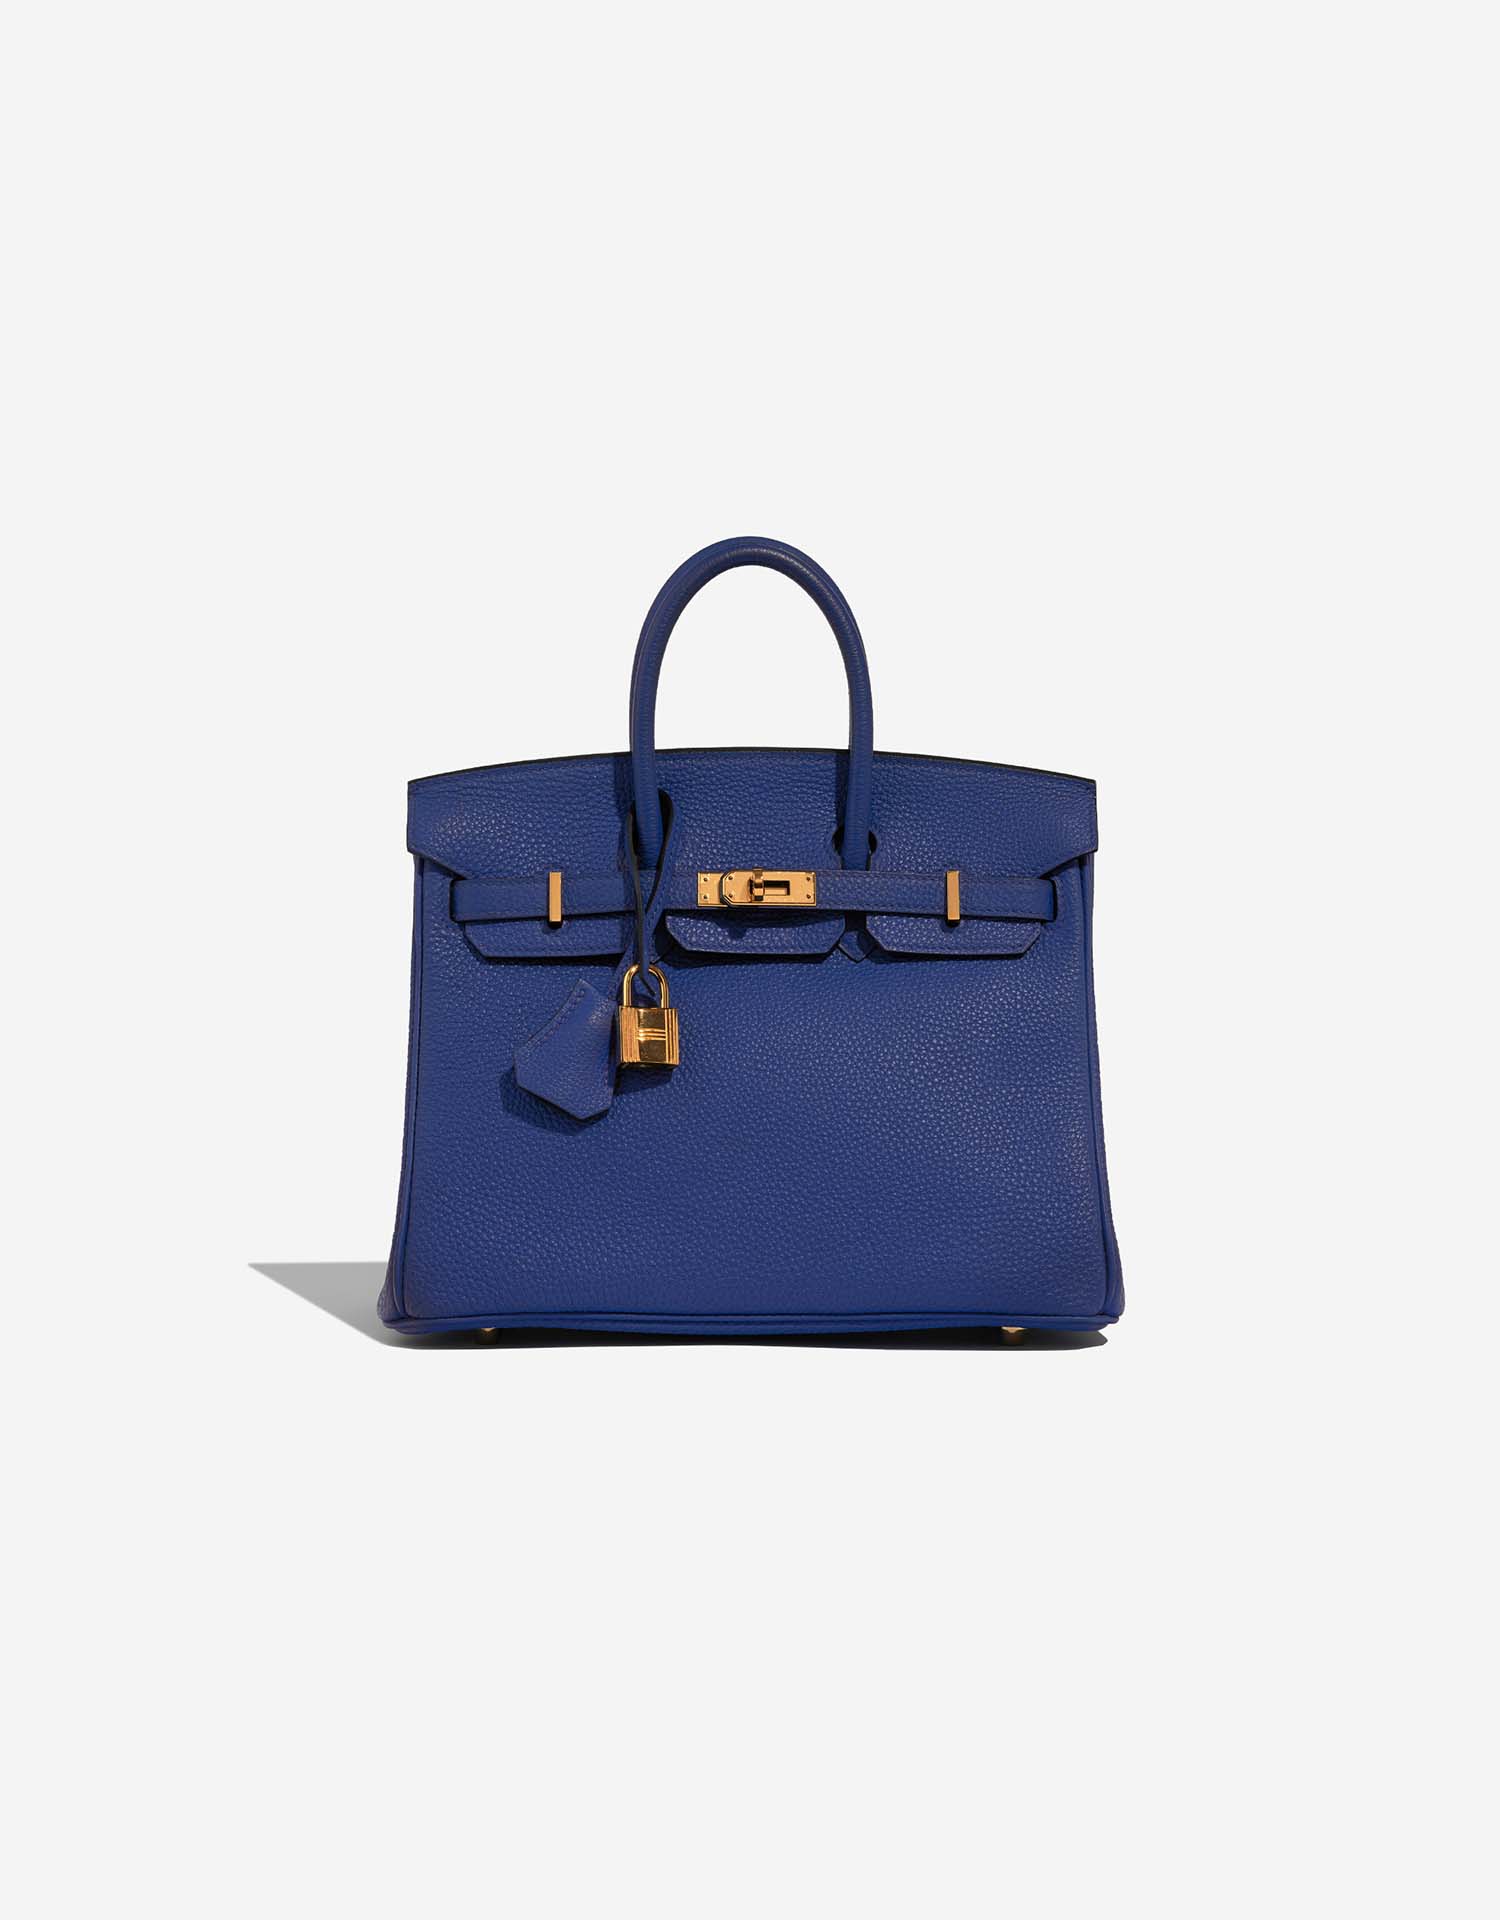 Hermès Birkin 25 Togo Blue Electrique